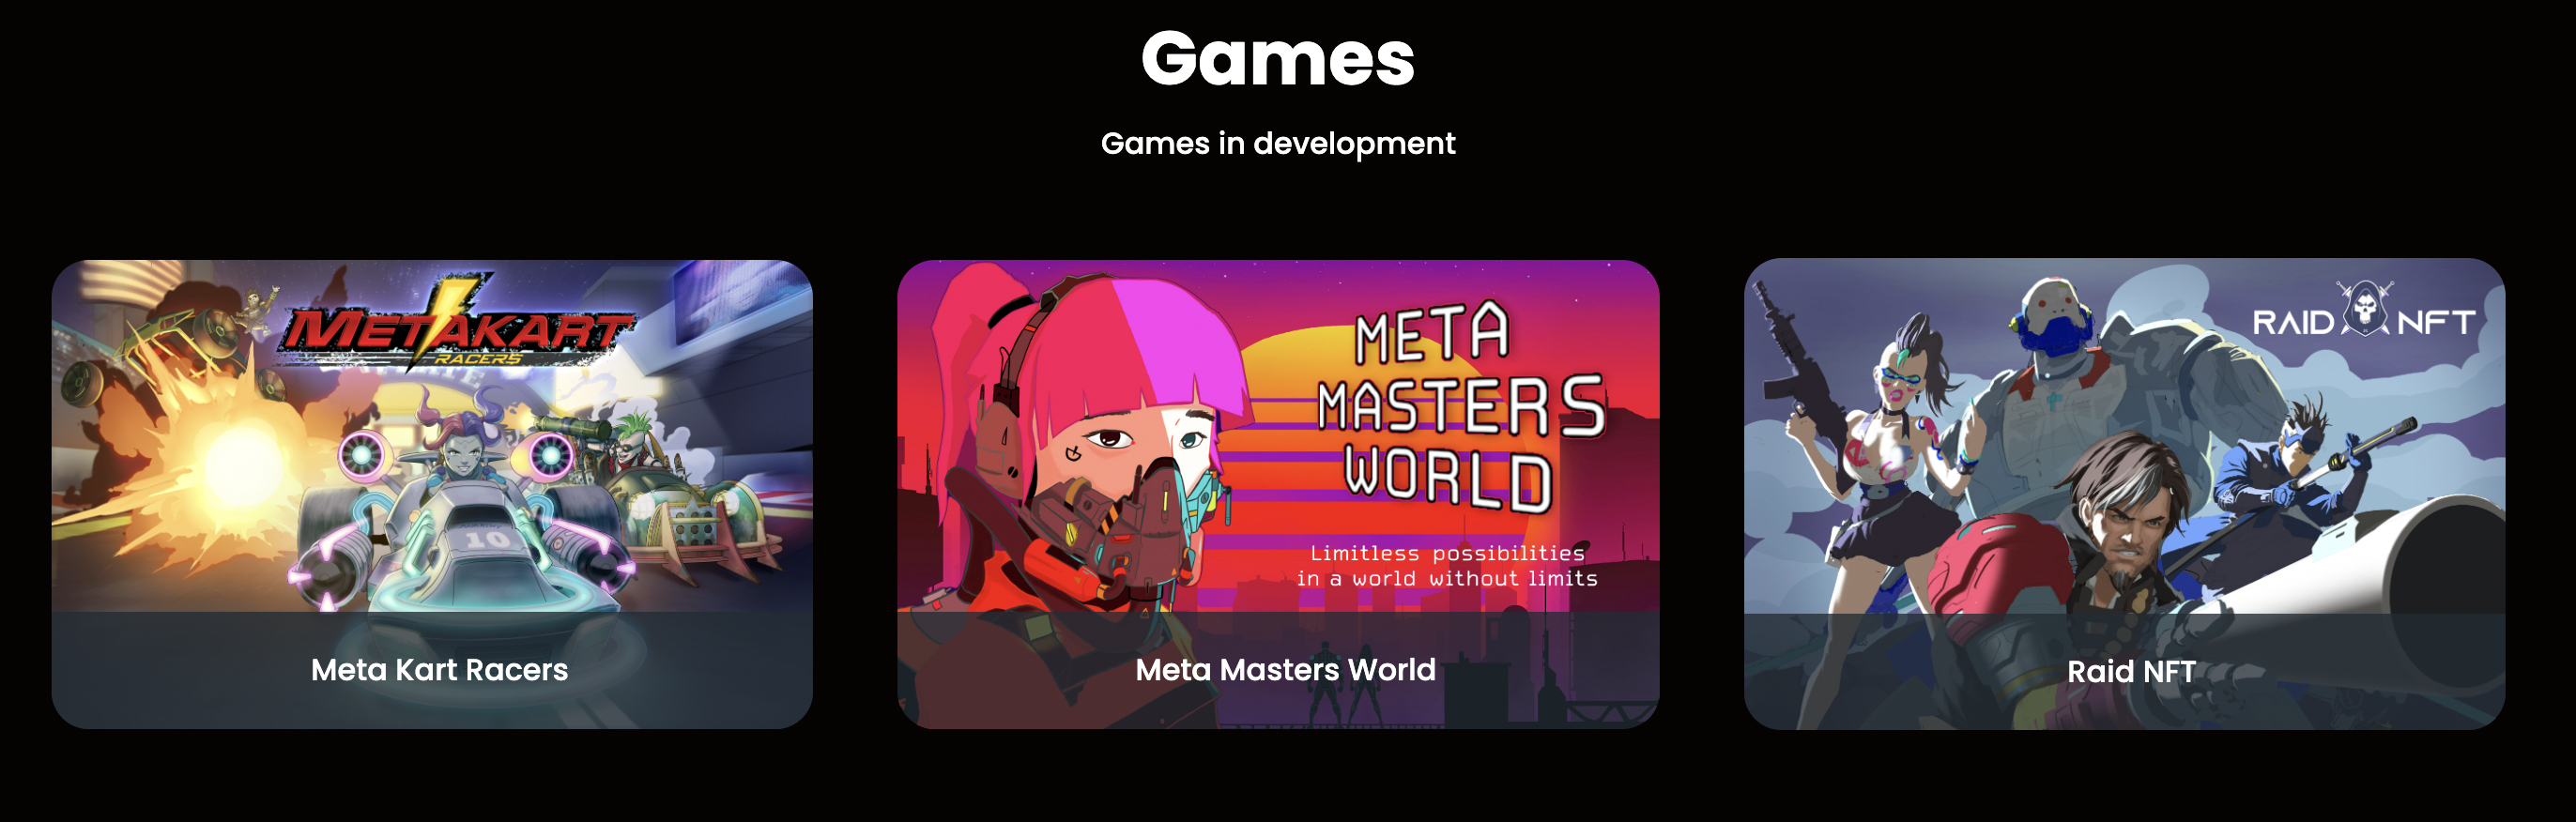 Memag games in development